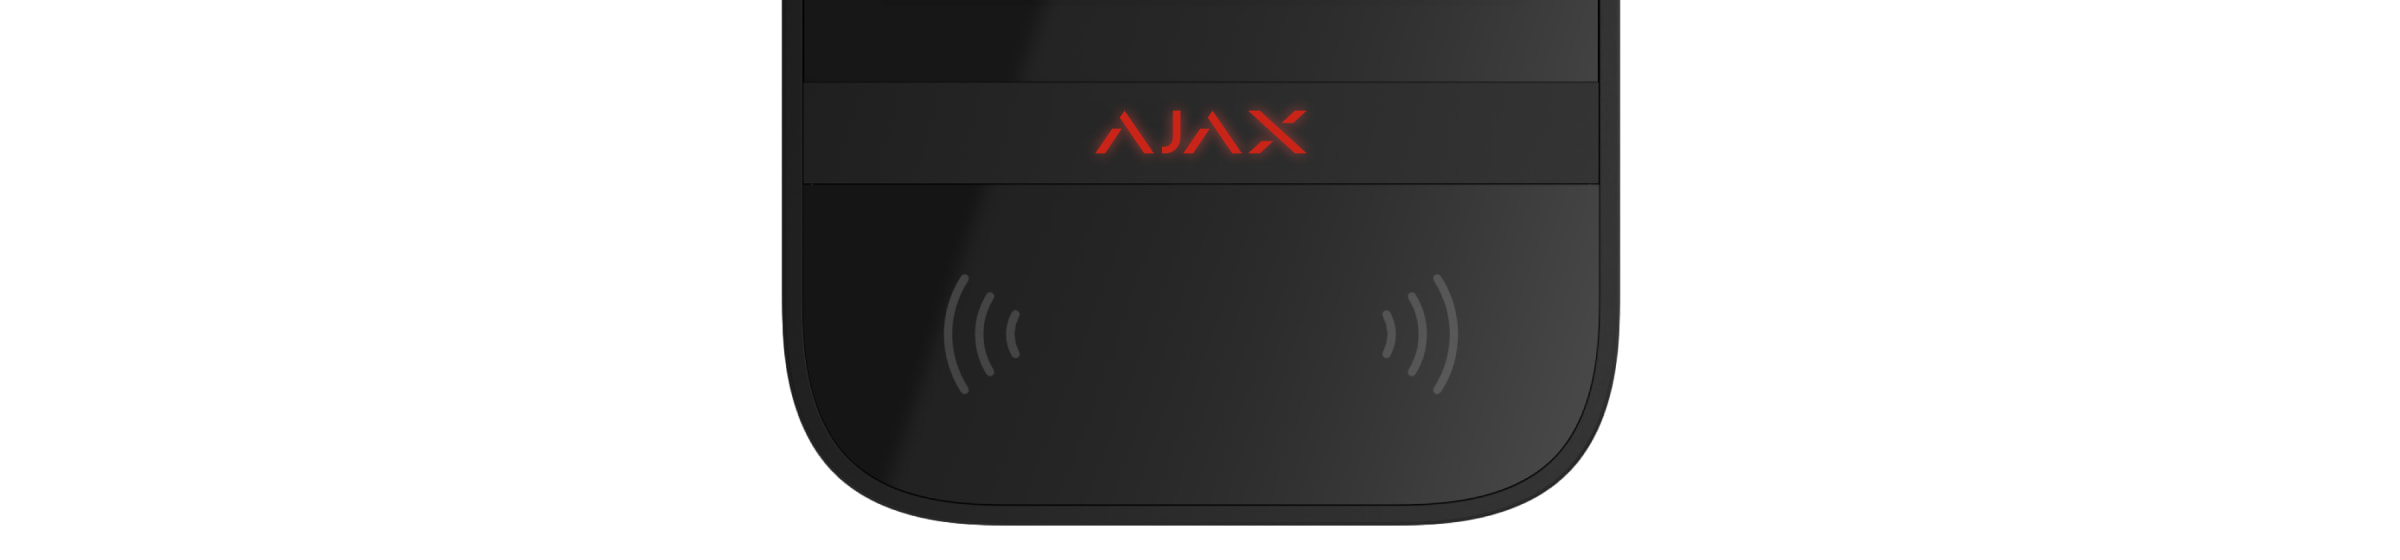 ajax keypad touchscreen